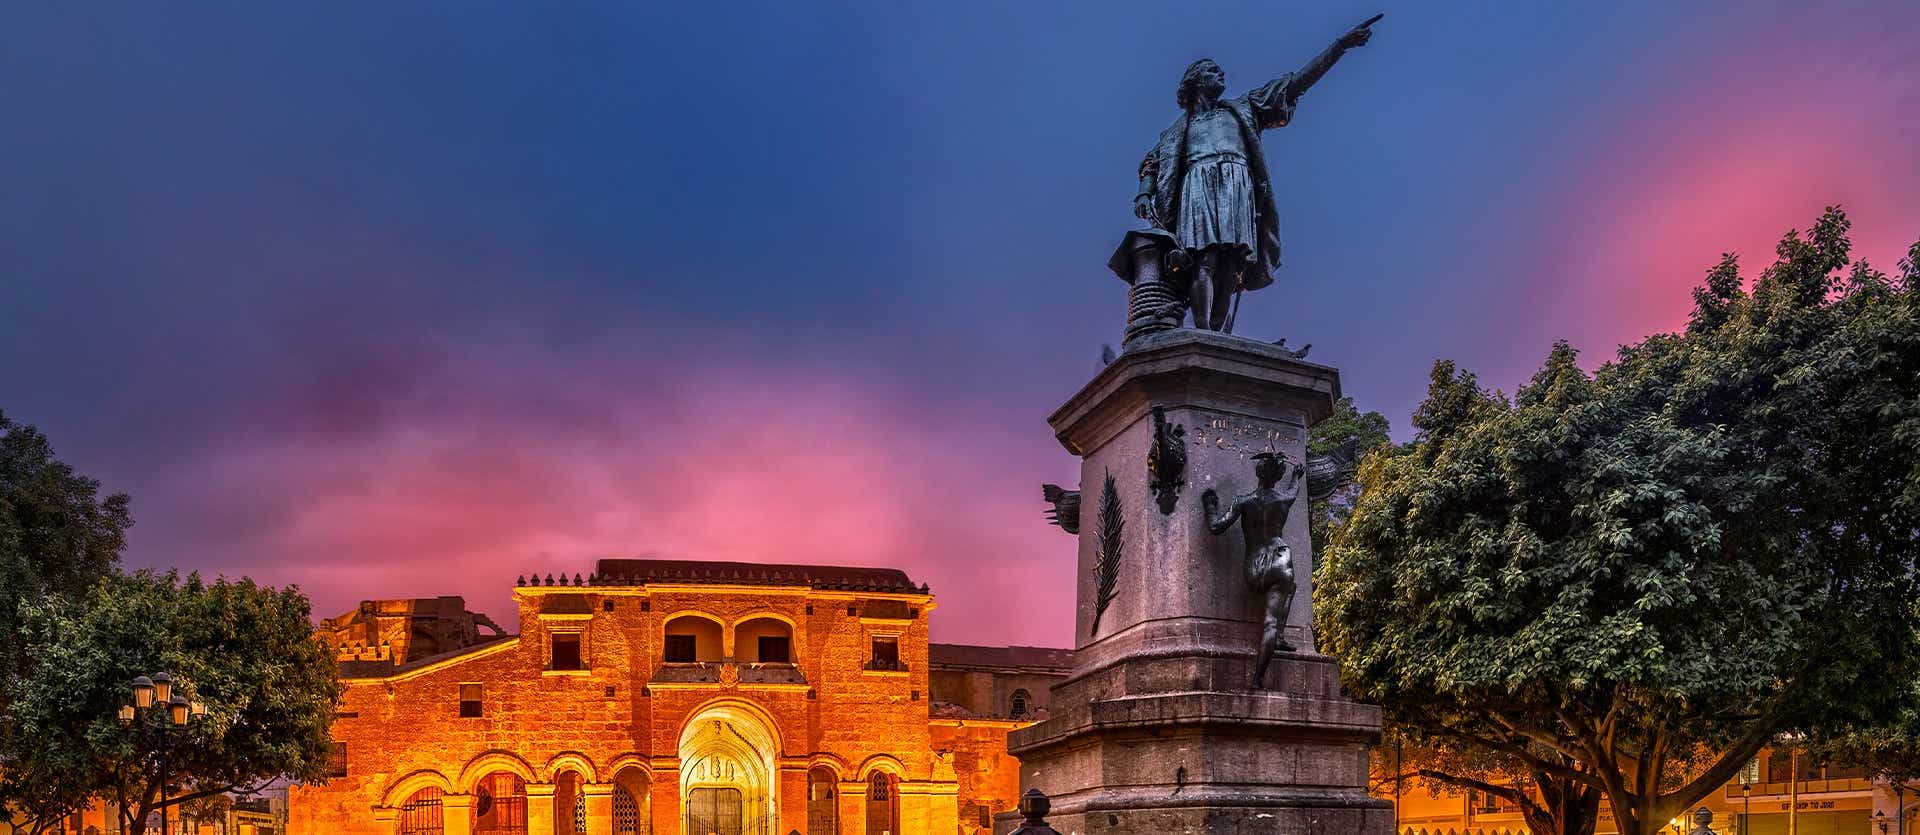 Columbus Statue <span class="iconos separador"></span> Santo Domingo 